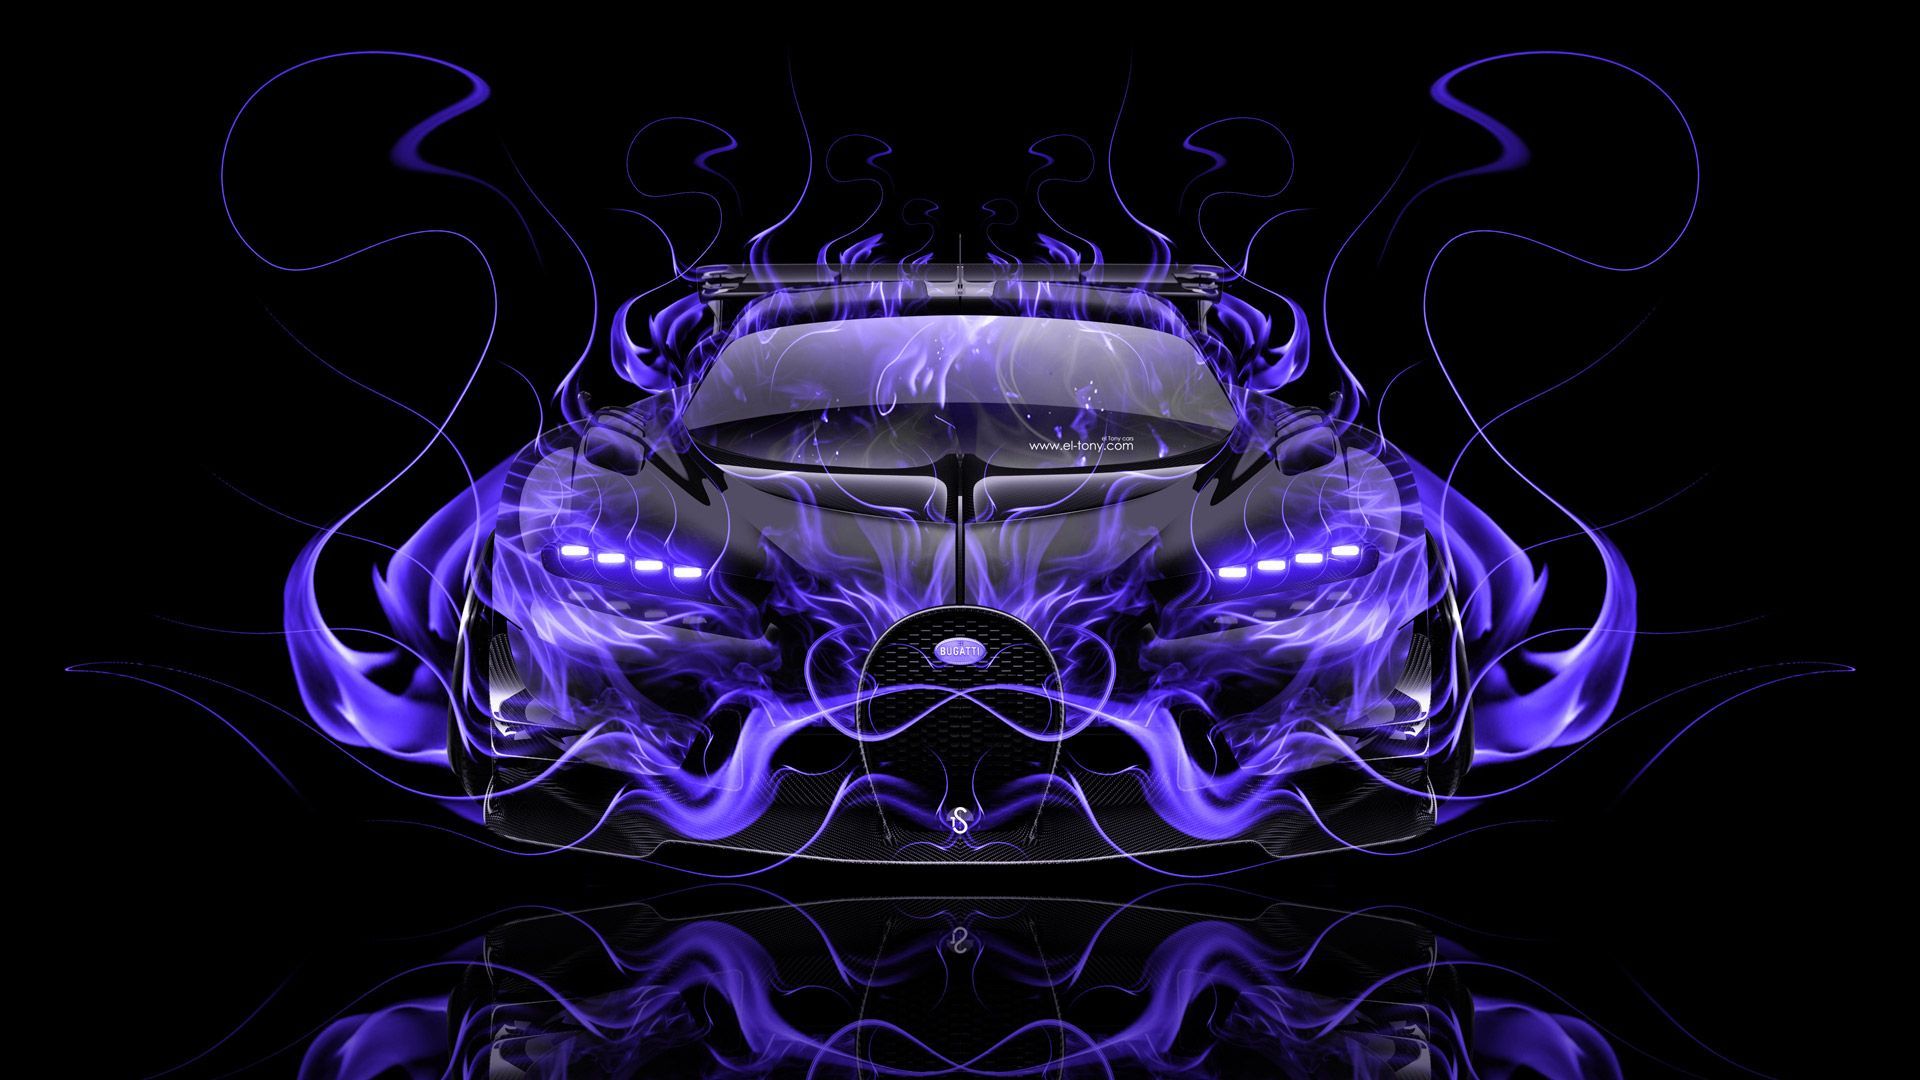 Bugatti Vision Gran Turismo FrontUp Super Fire Flame Abstract Car 2016 Violet Black Colors HD Wallpaper Design By. Car Background, Bugatti, Luxury Cars Mercedes